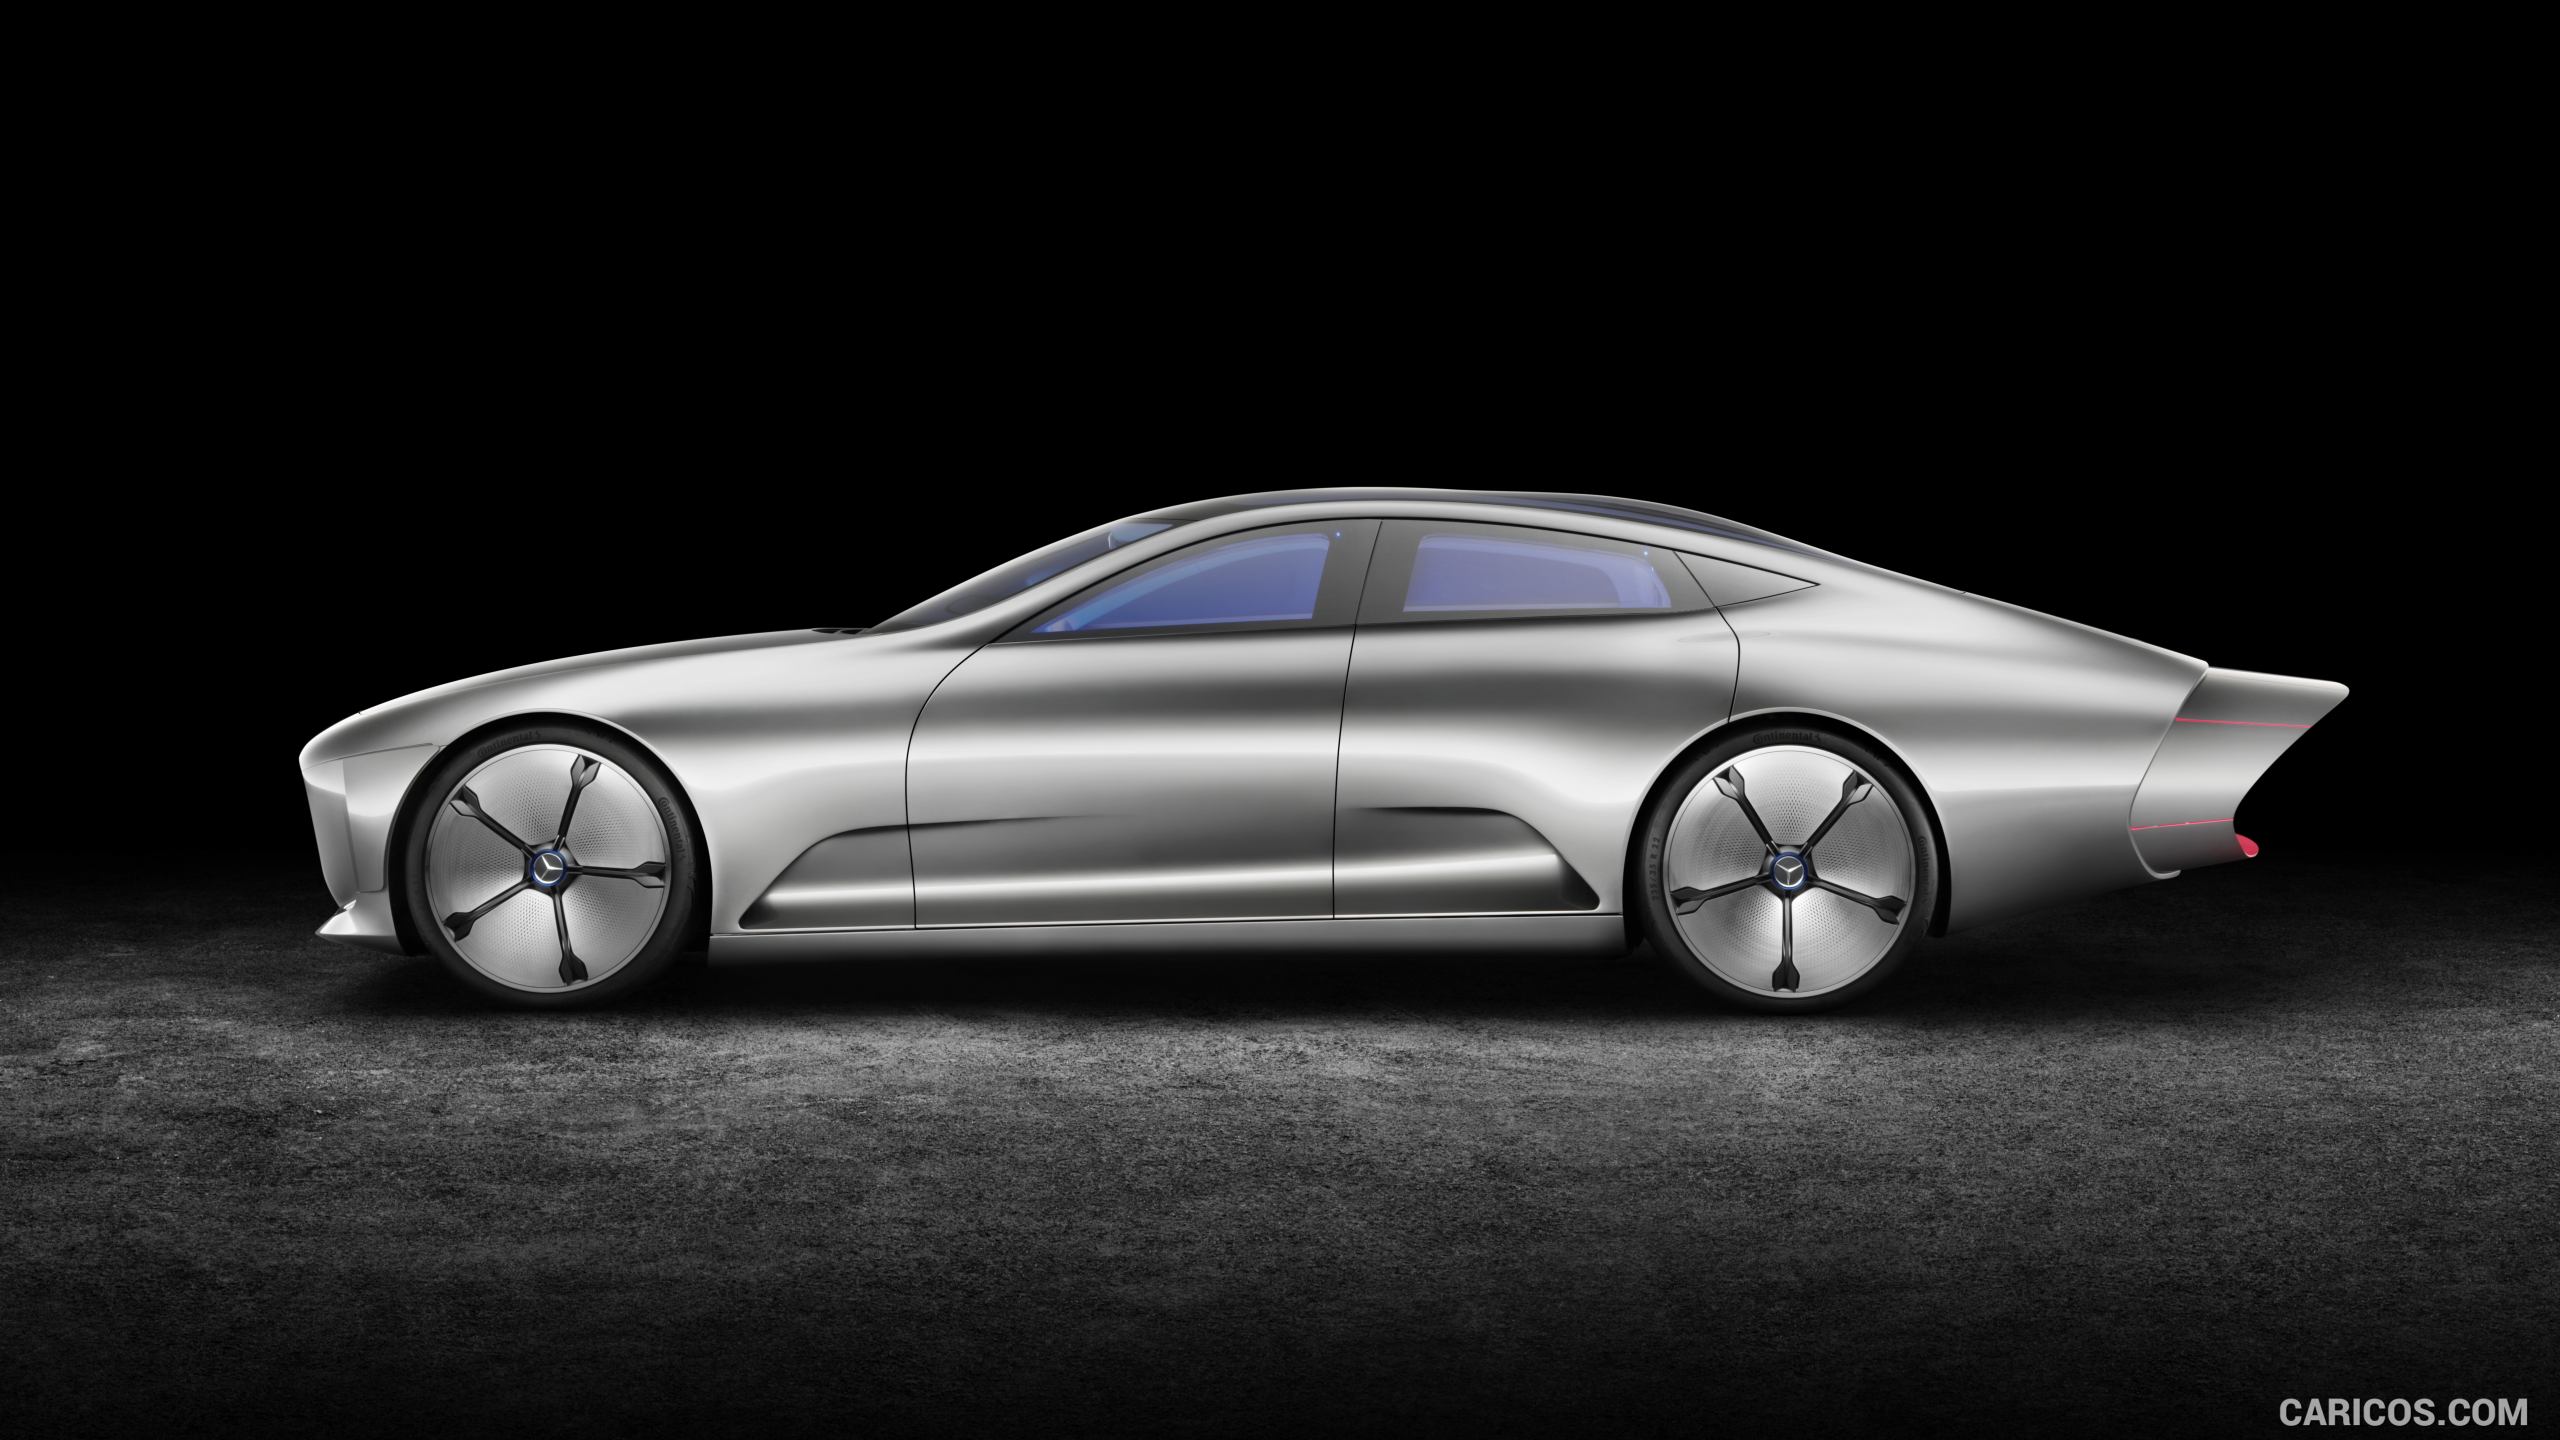 2015 Mercedes-Benz Concept IAA (Intelligent Aerodynamic Automobile) - Side, #21 of 49